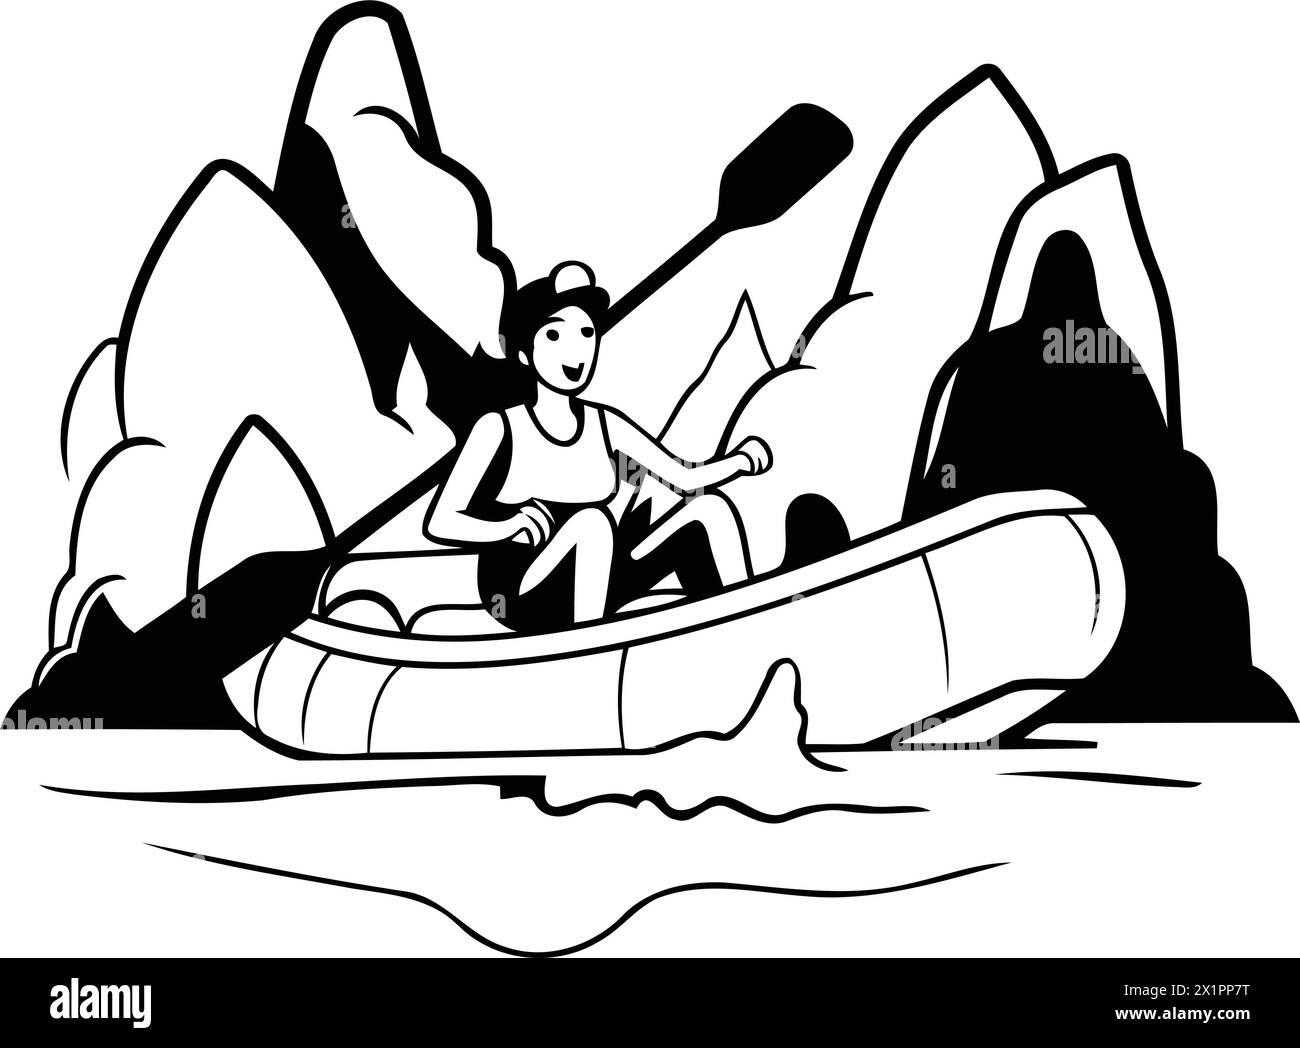 Woman paddling a kayak on the river. Cartoon vector illustration. Stock Vector